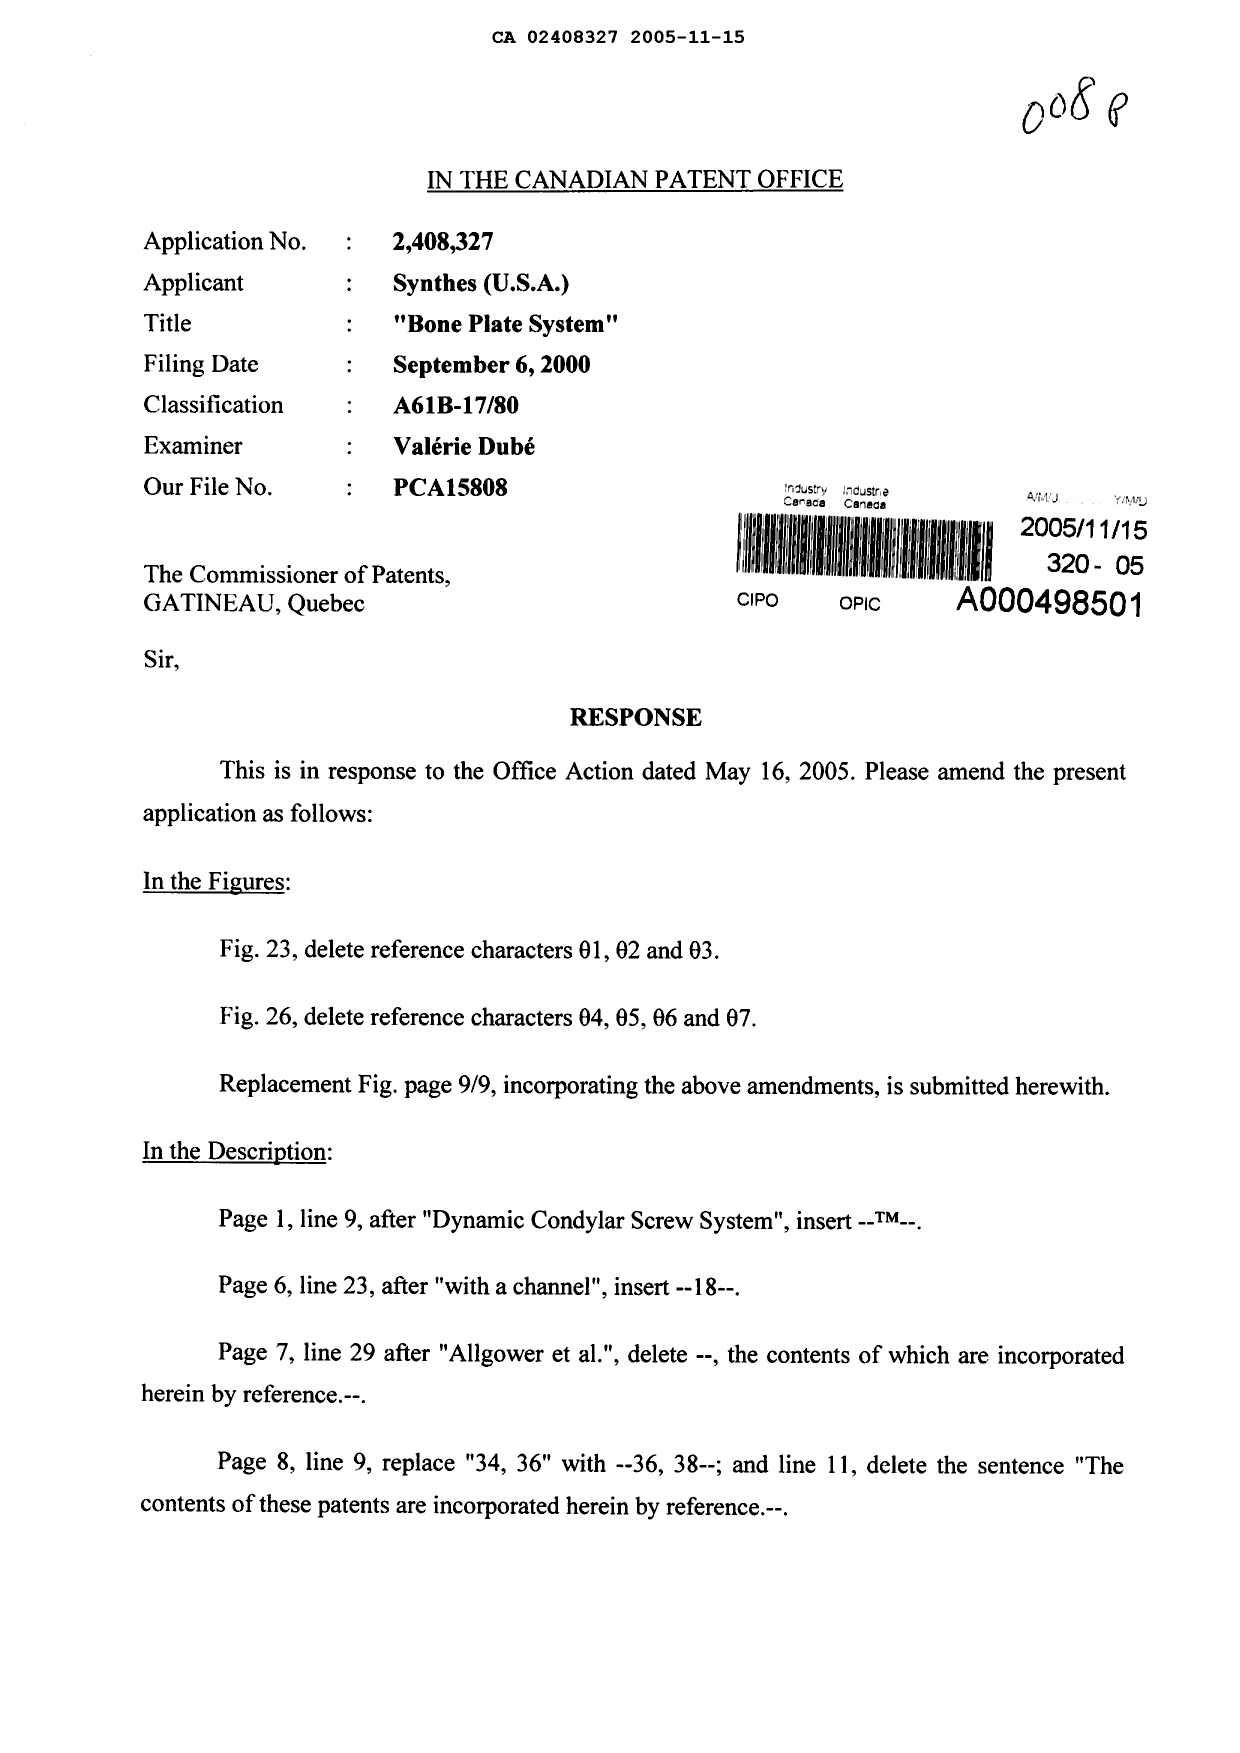 Canadian Patent Document 2408327. Prosecution-Amendment 20051115. Image 1 of 13